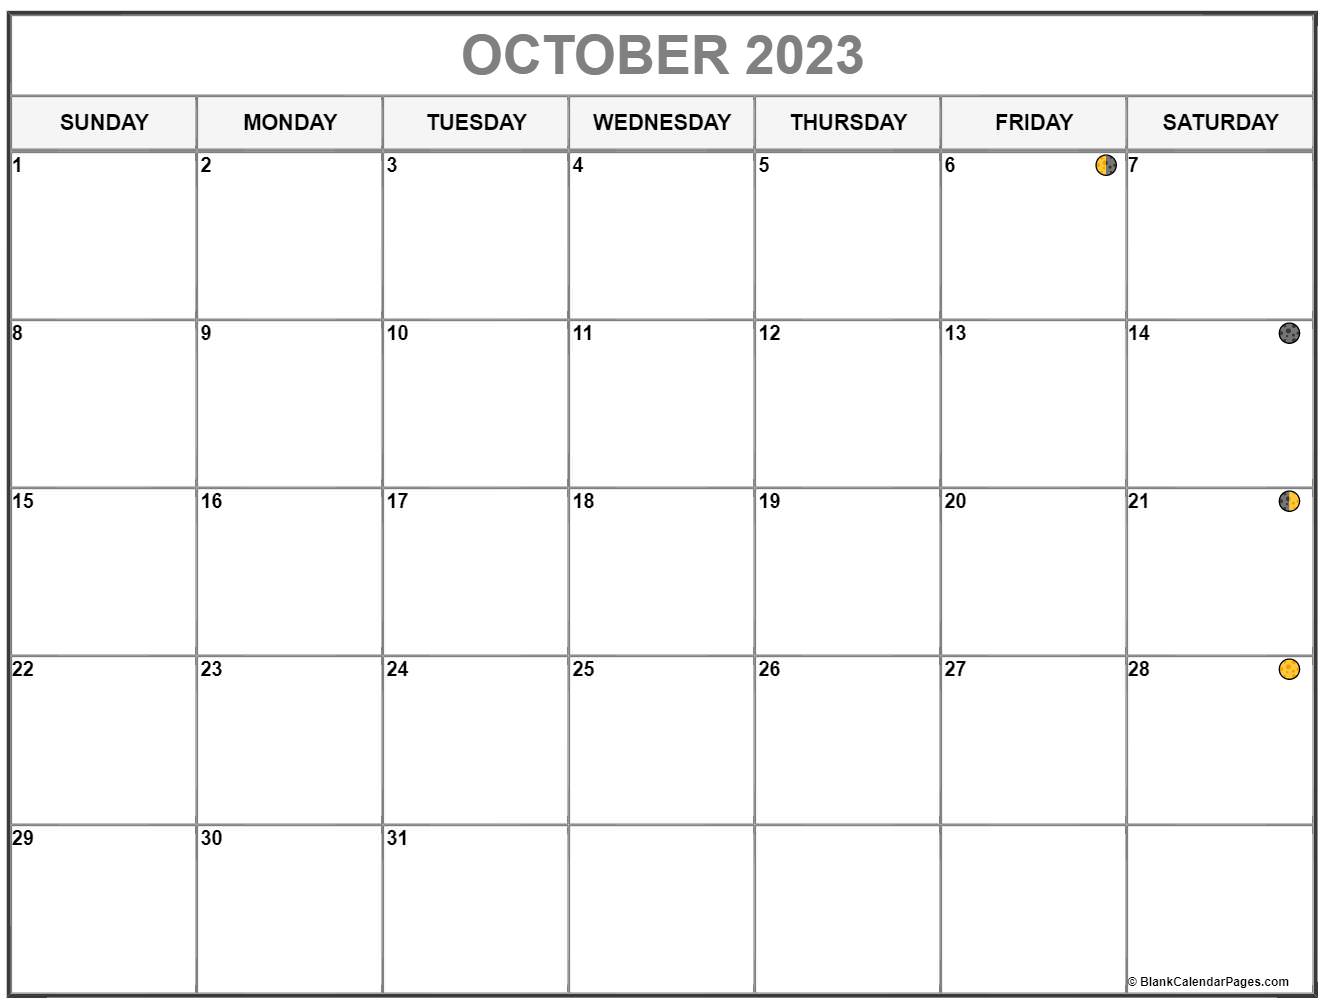 2023 October Calendars Handy Calendars Images and Photos finder